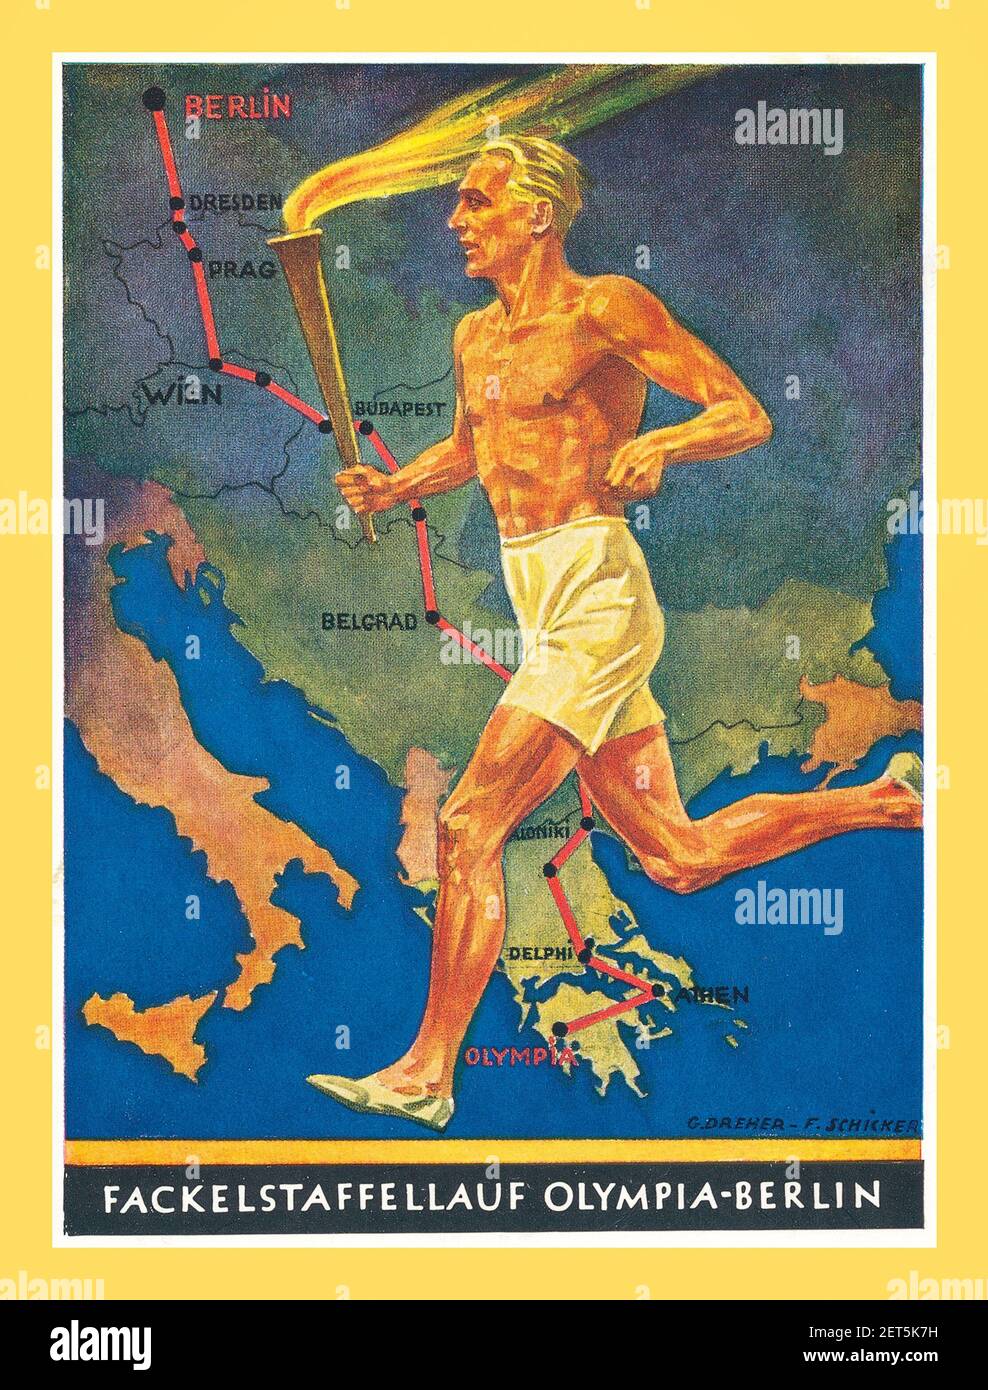 Berlin Olympics 1936 Vintage Propaganda Poster Nazi Germany Olympic Games Torch Relay run from Greece to Berlin Germany 'fackelstaffellauf Olympia-Berlin" Stock Photo